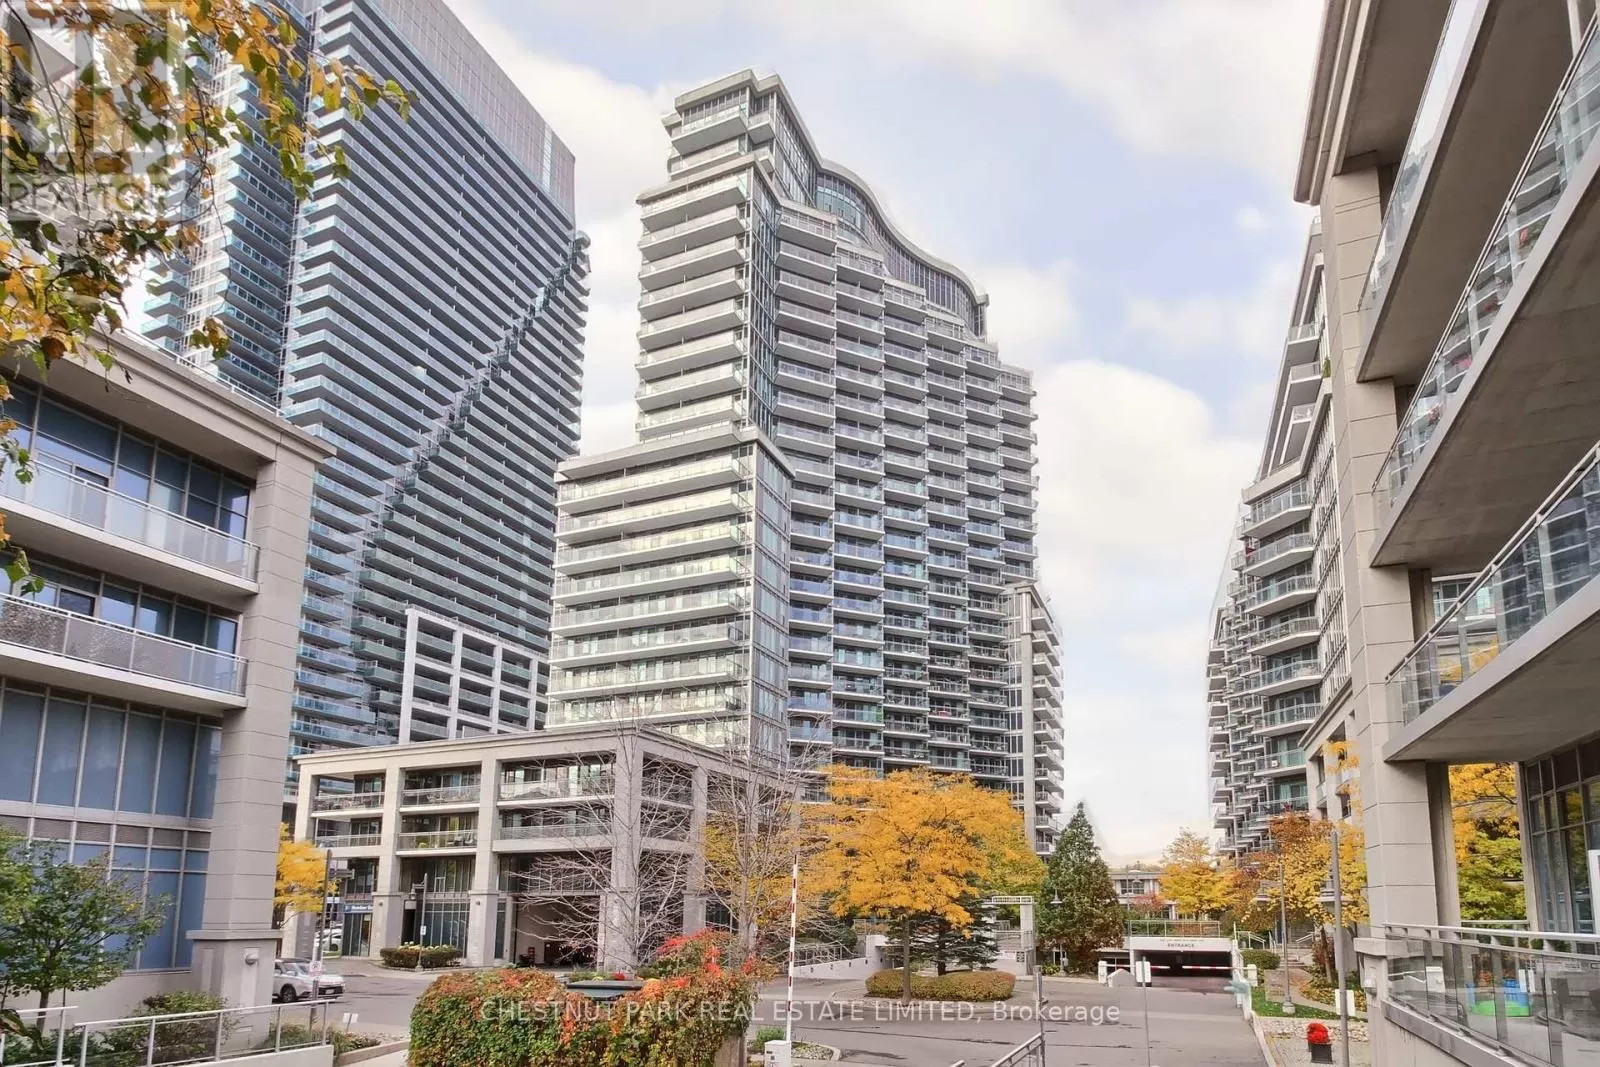 Apartment for rent: 1805 - 2121 Lakeshore Boulevard W, Toronto, Ontario M8V 4E9